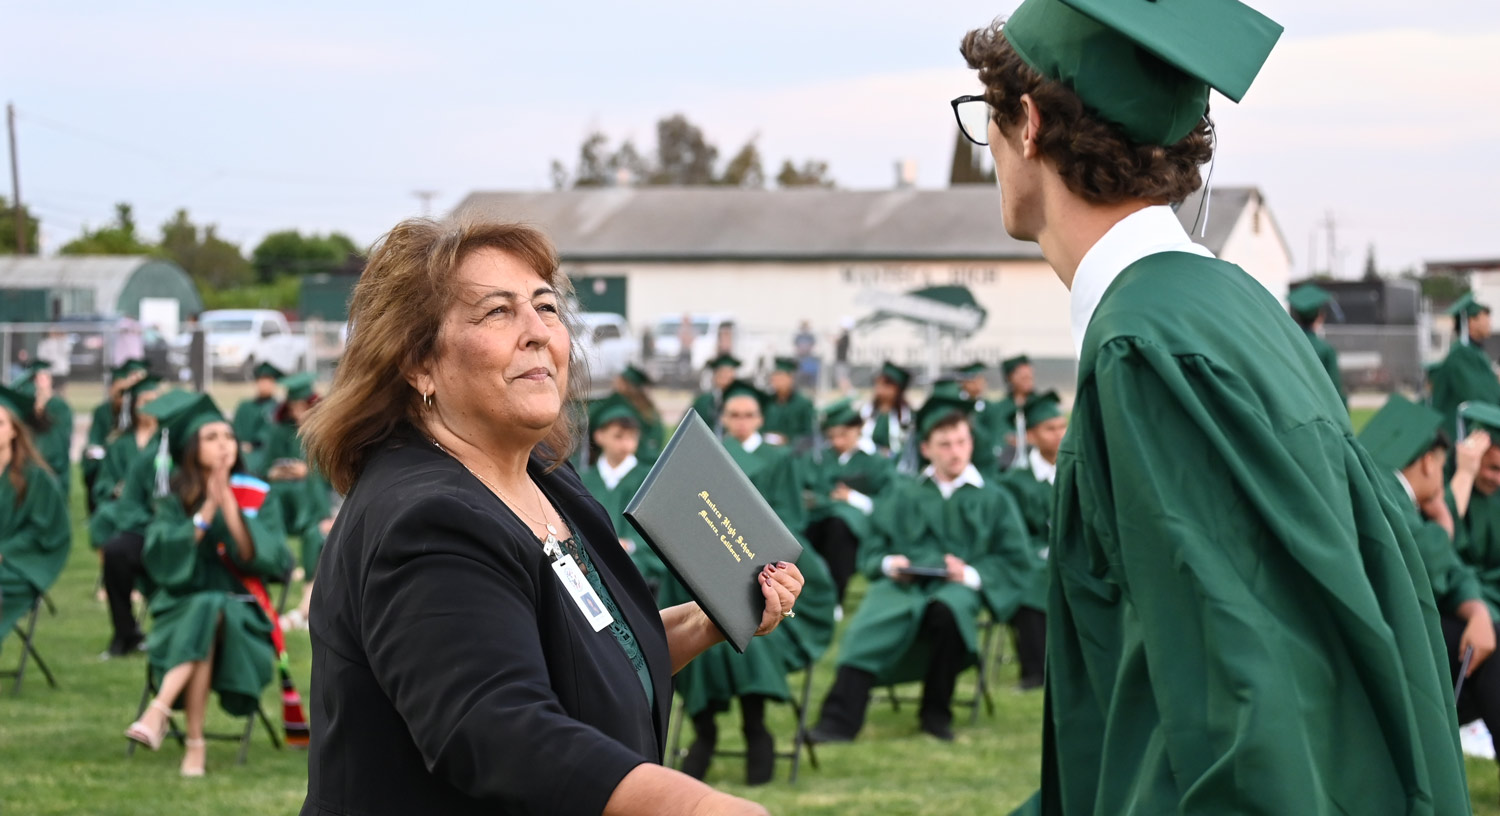 Marie Freitas congratulating student at graduation ceremony